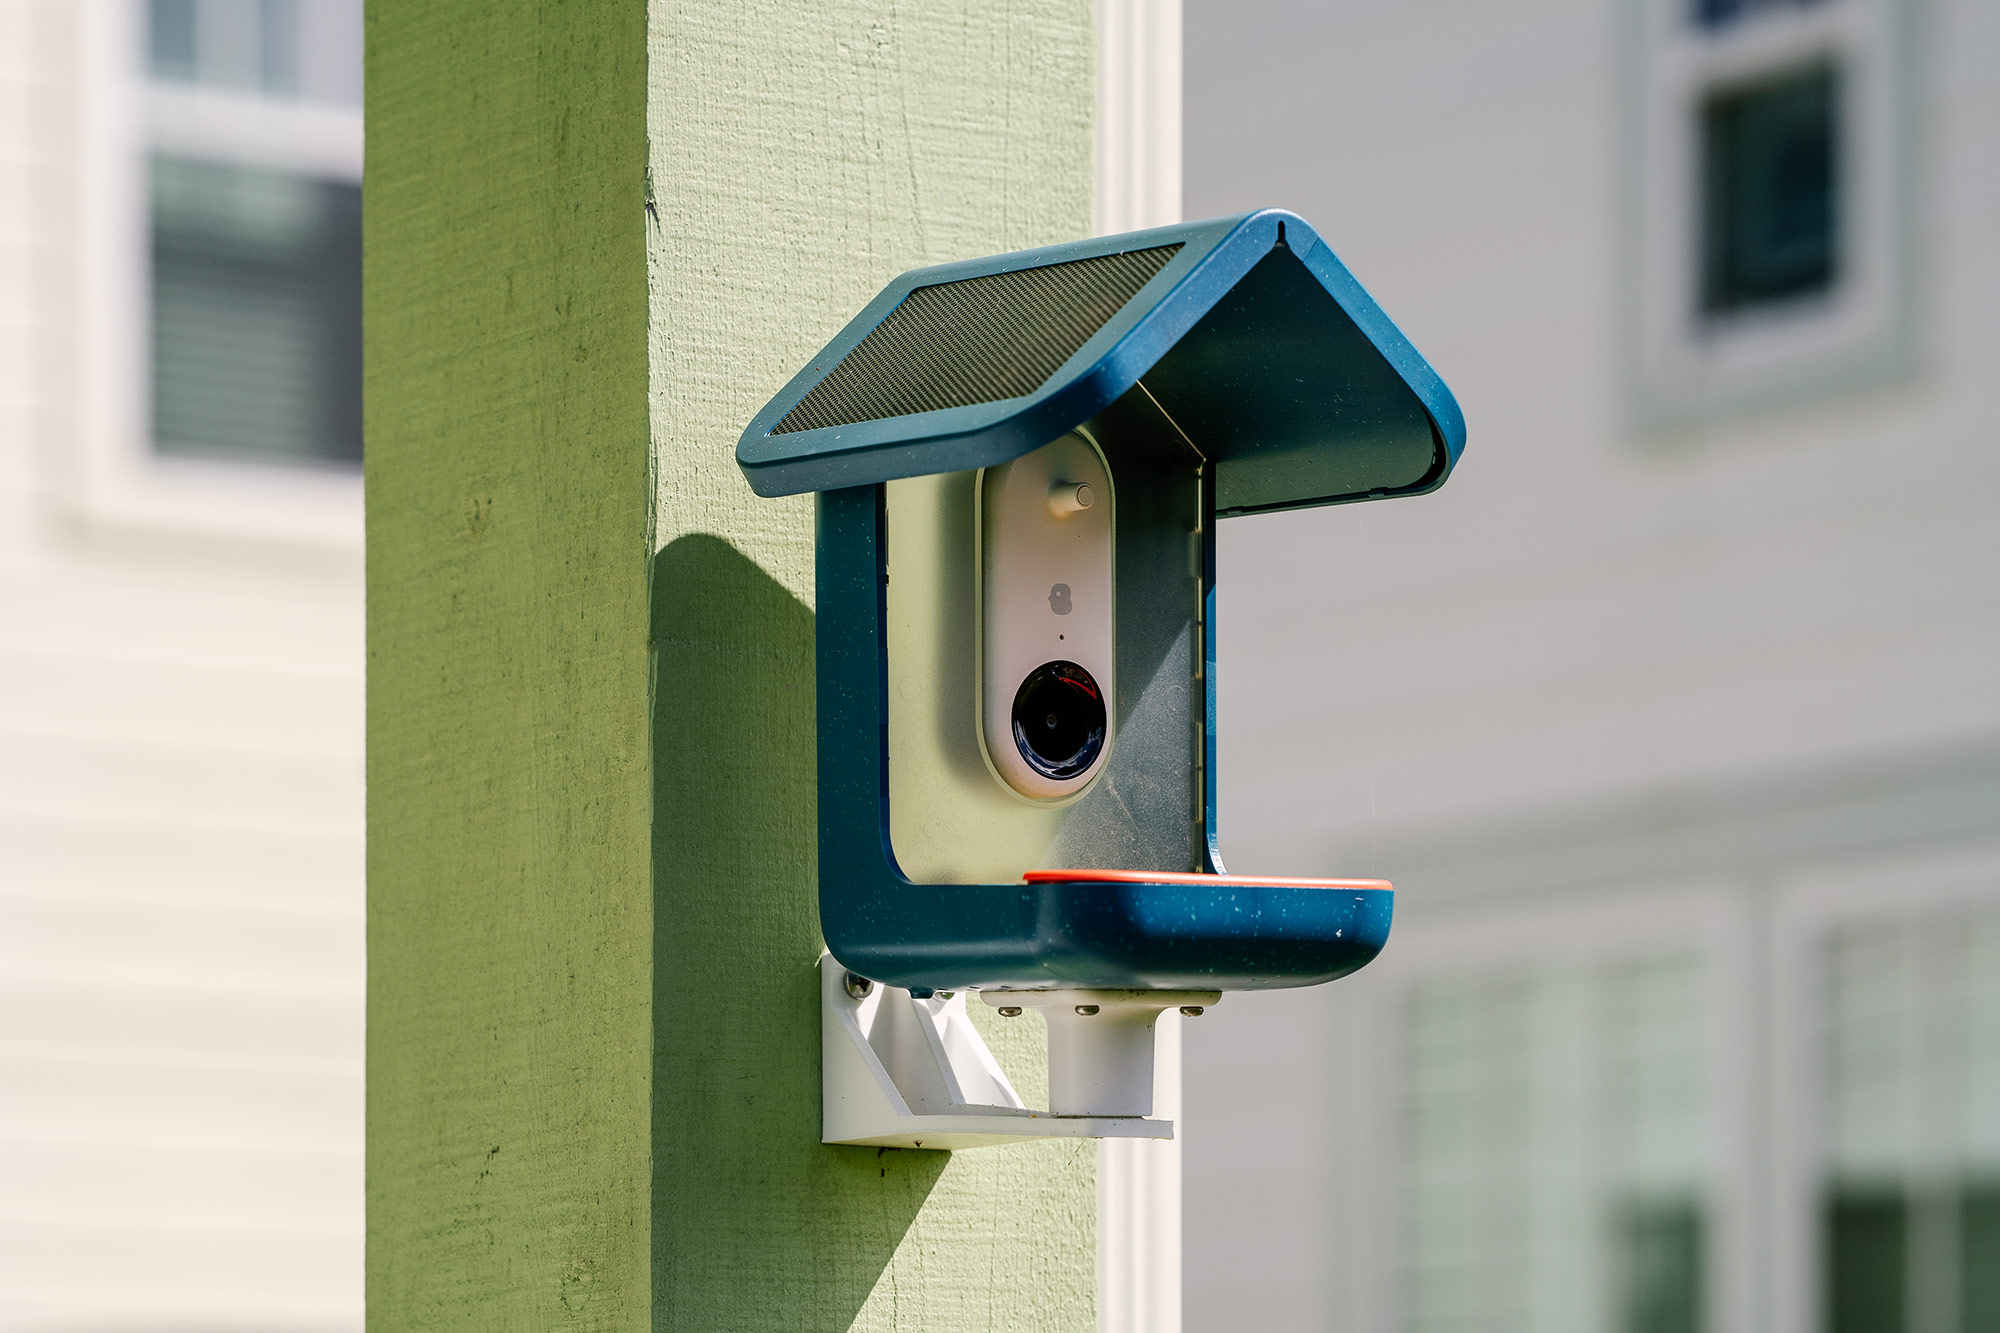 Bird Buddy Smart Bird Feeder review: A camera that's not just for